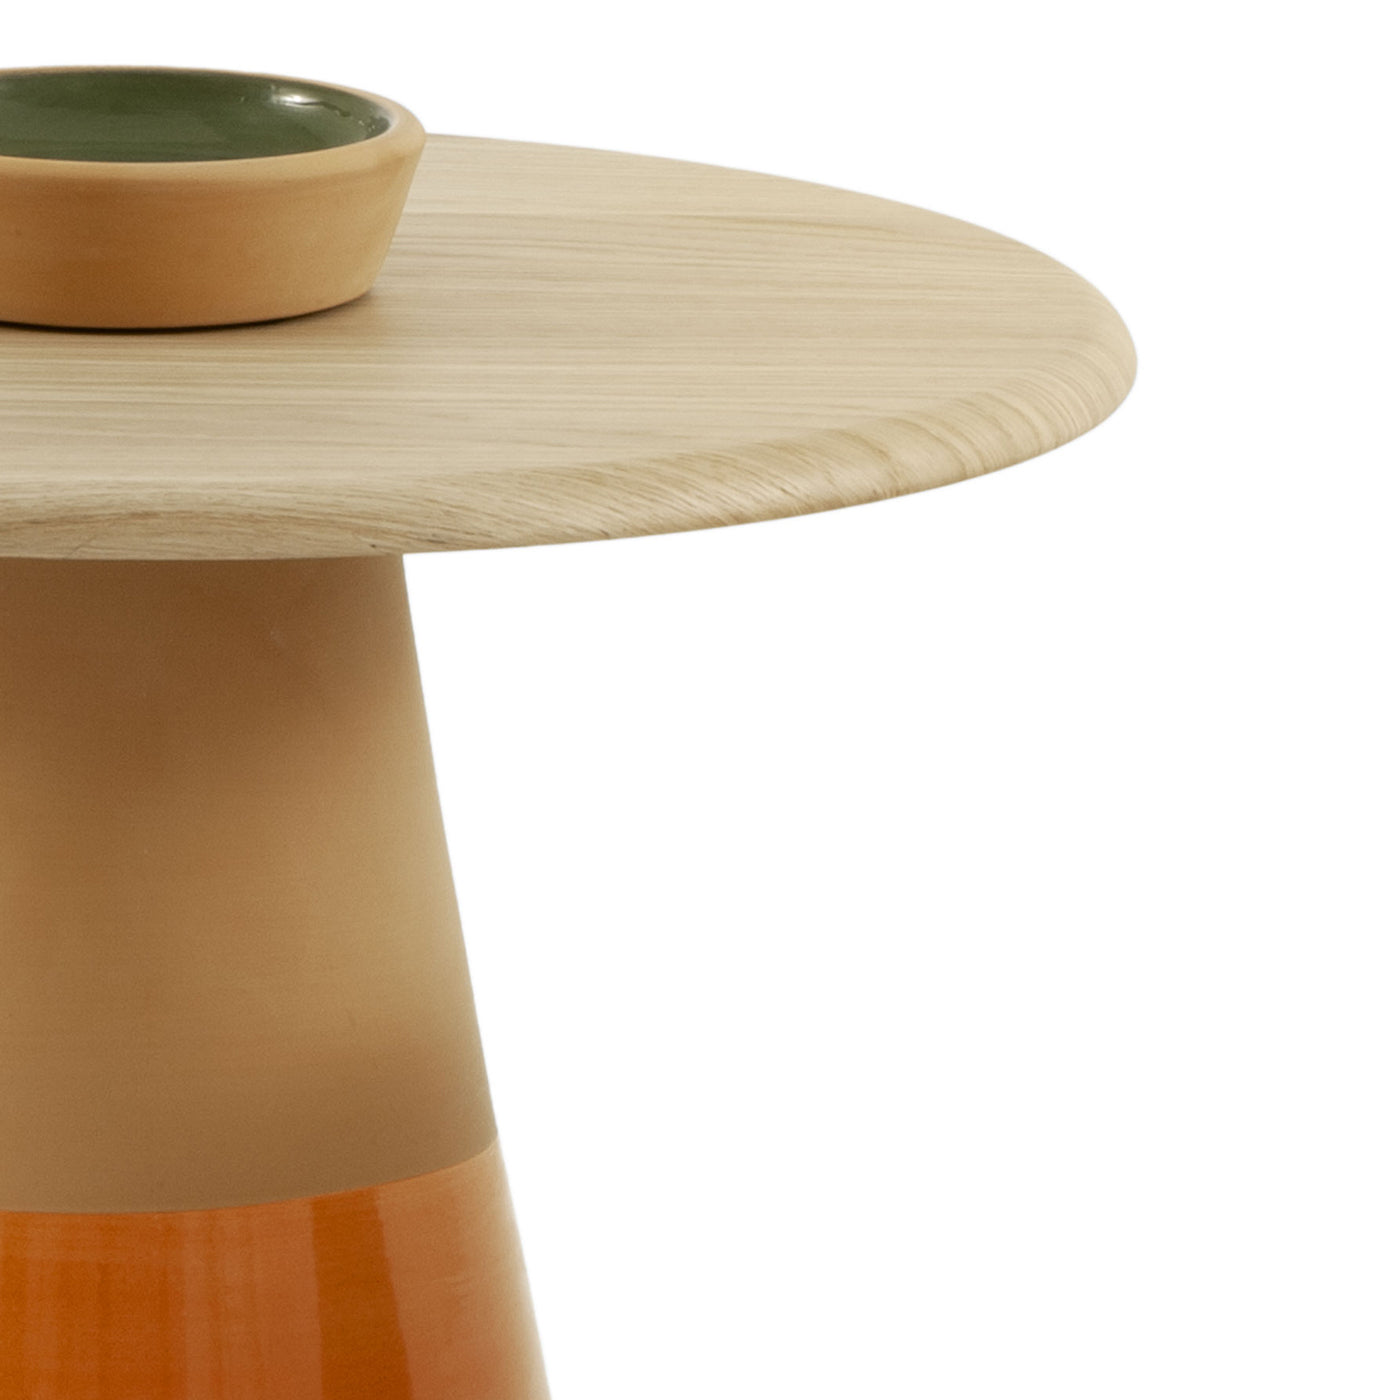 Sablier Tall Table with Clay Base & Oak Veneer Top - Alternative view 1